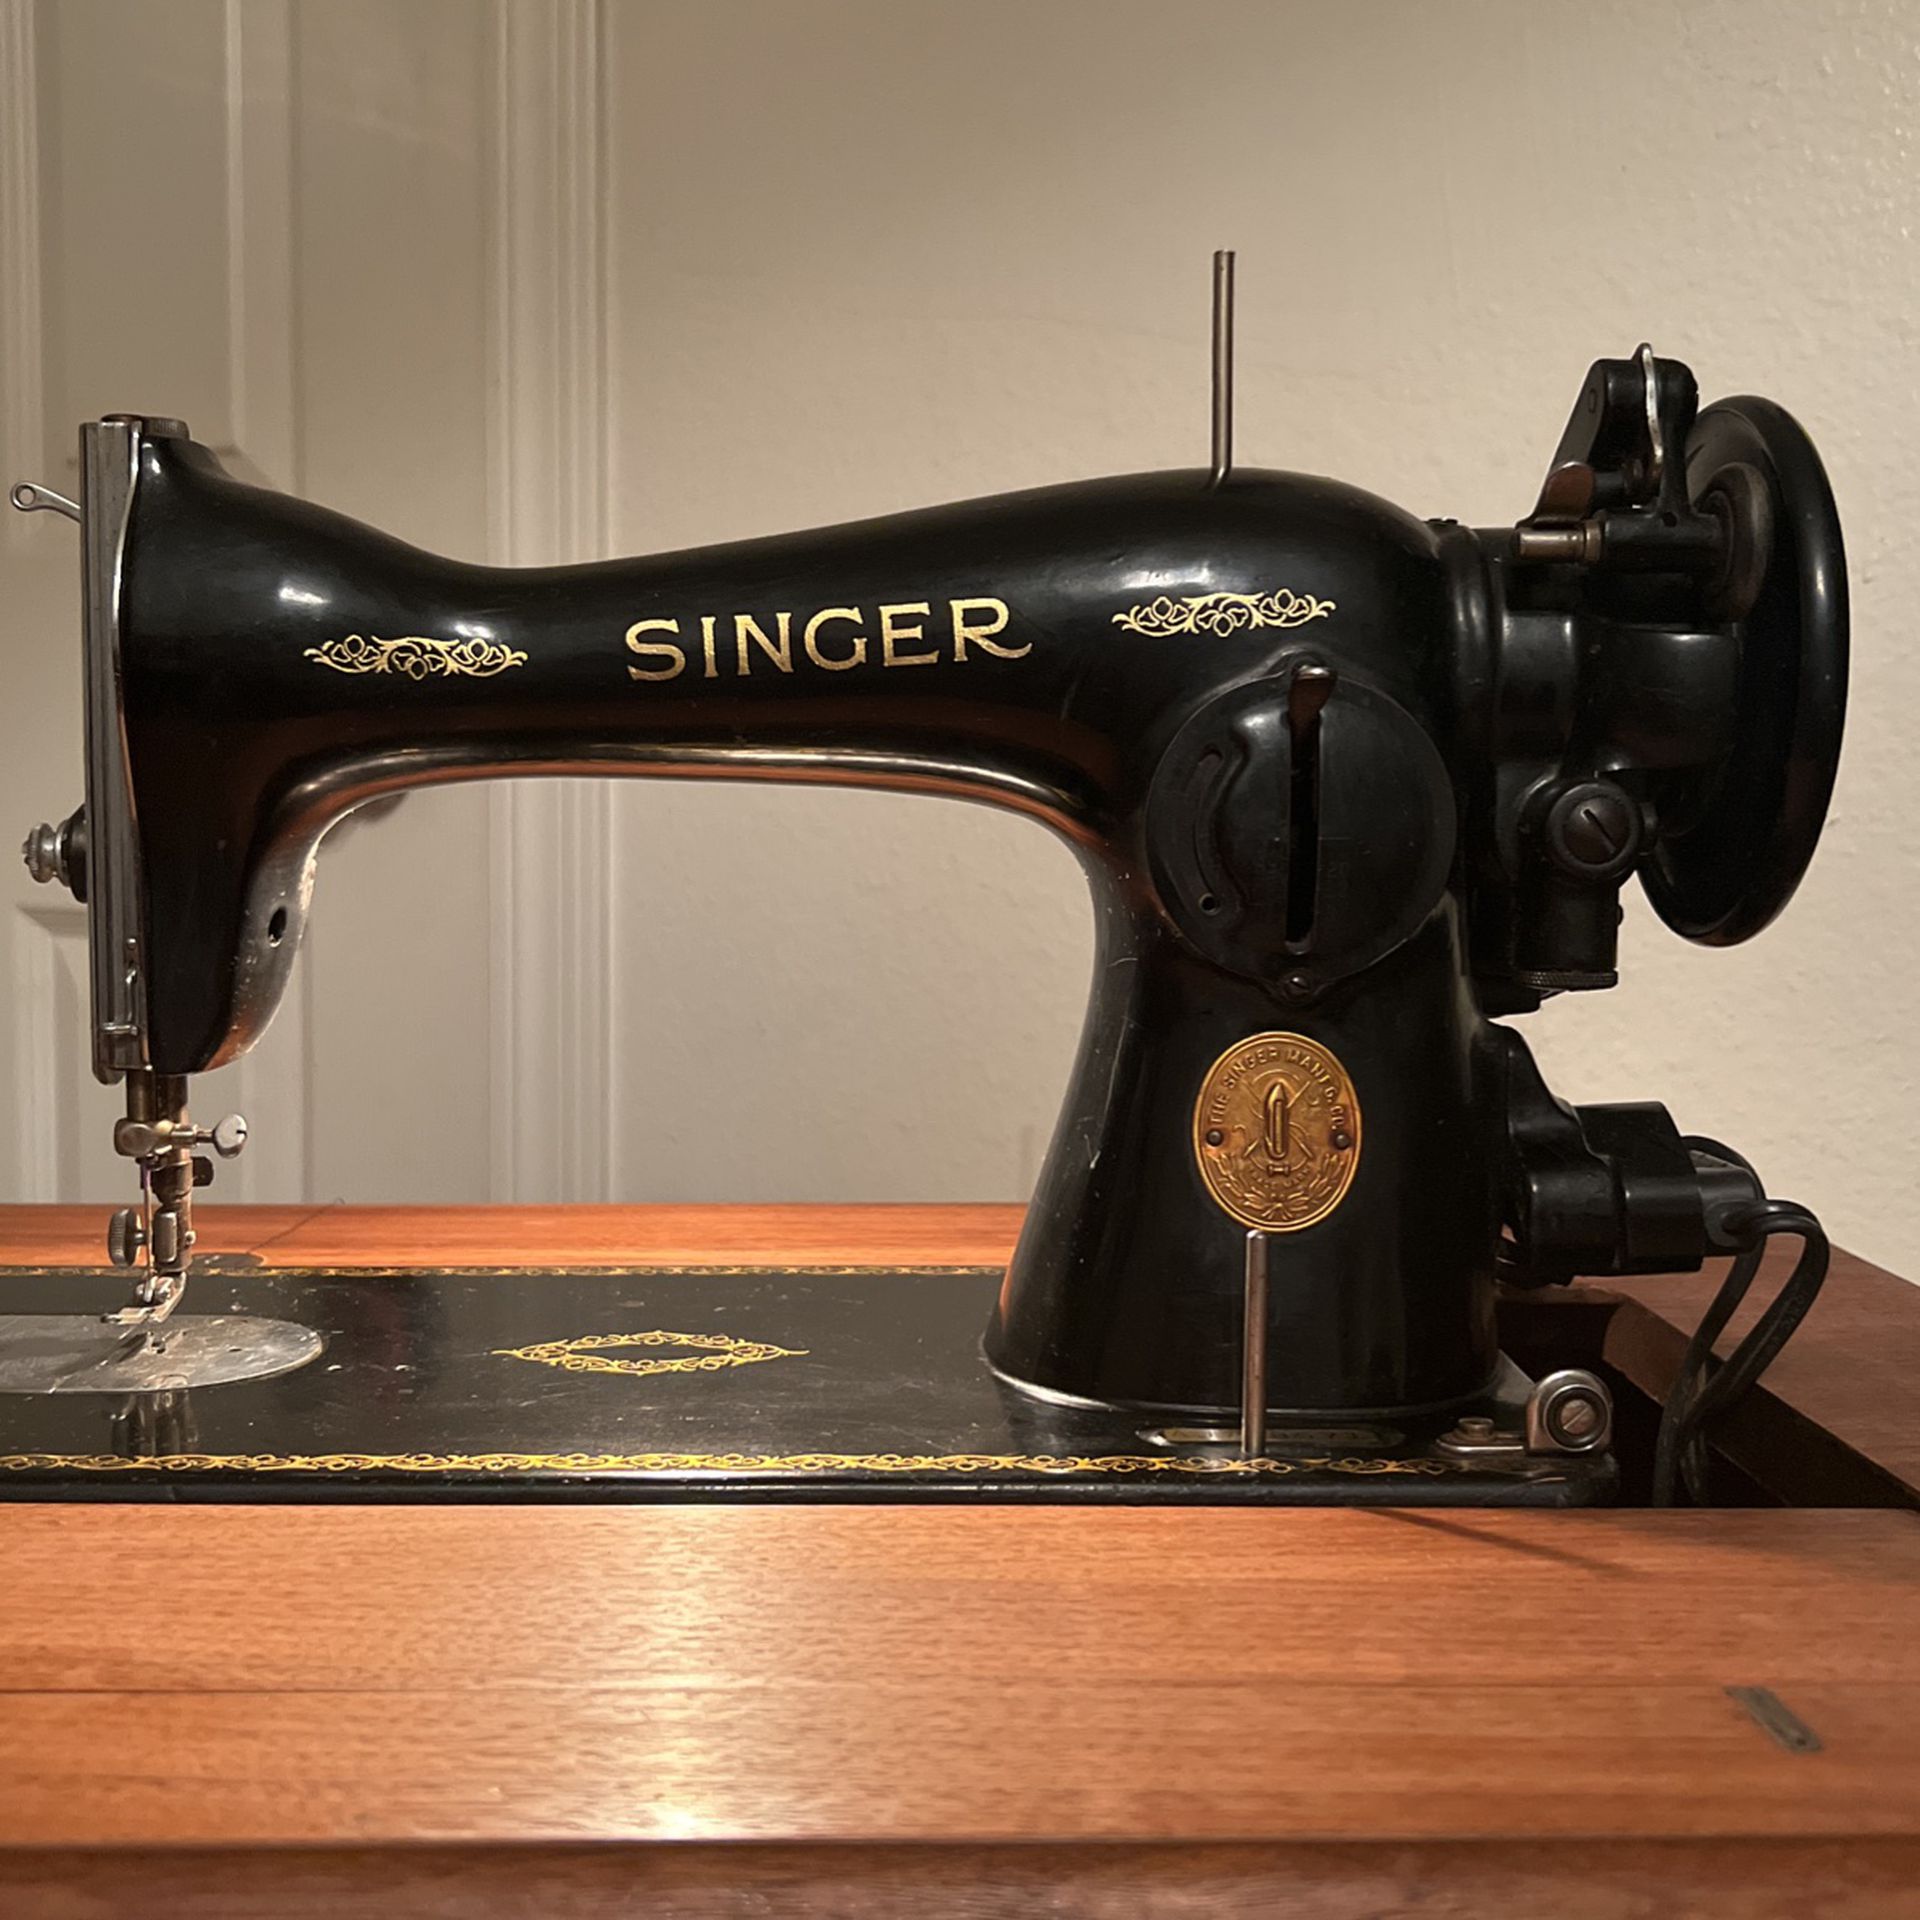 Working Beautiful Vintage, Singer Sewing Machine